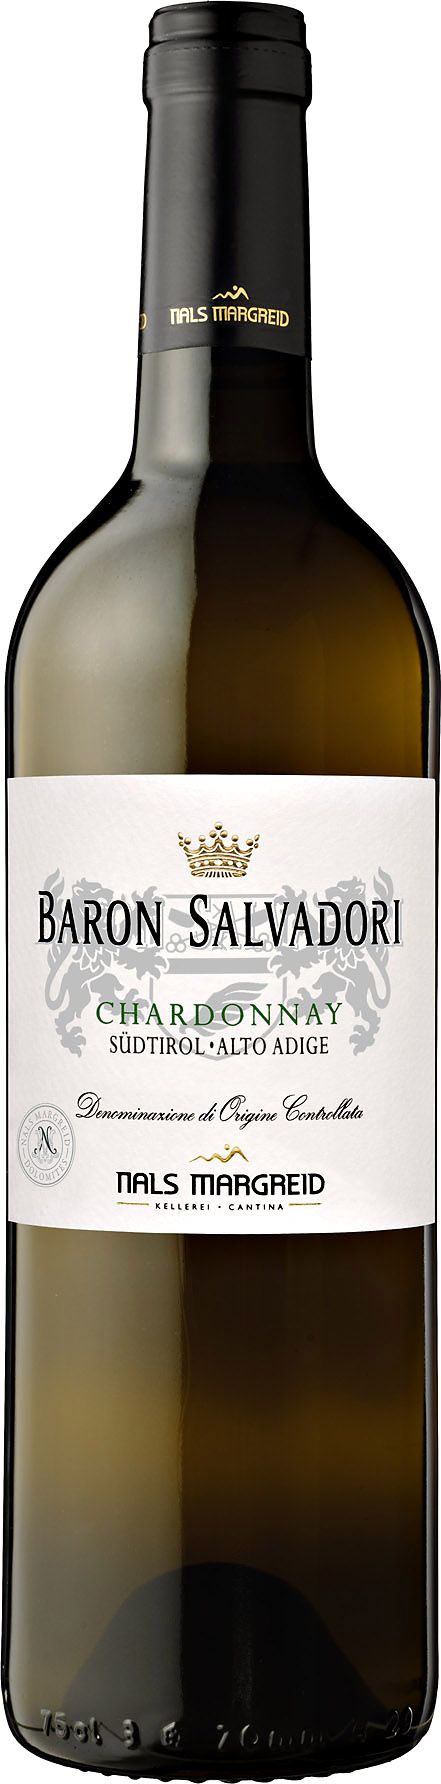 Nals Margreid, Baron Salvadori Chardonnay, 2011